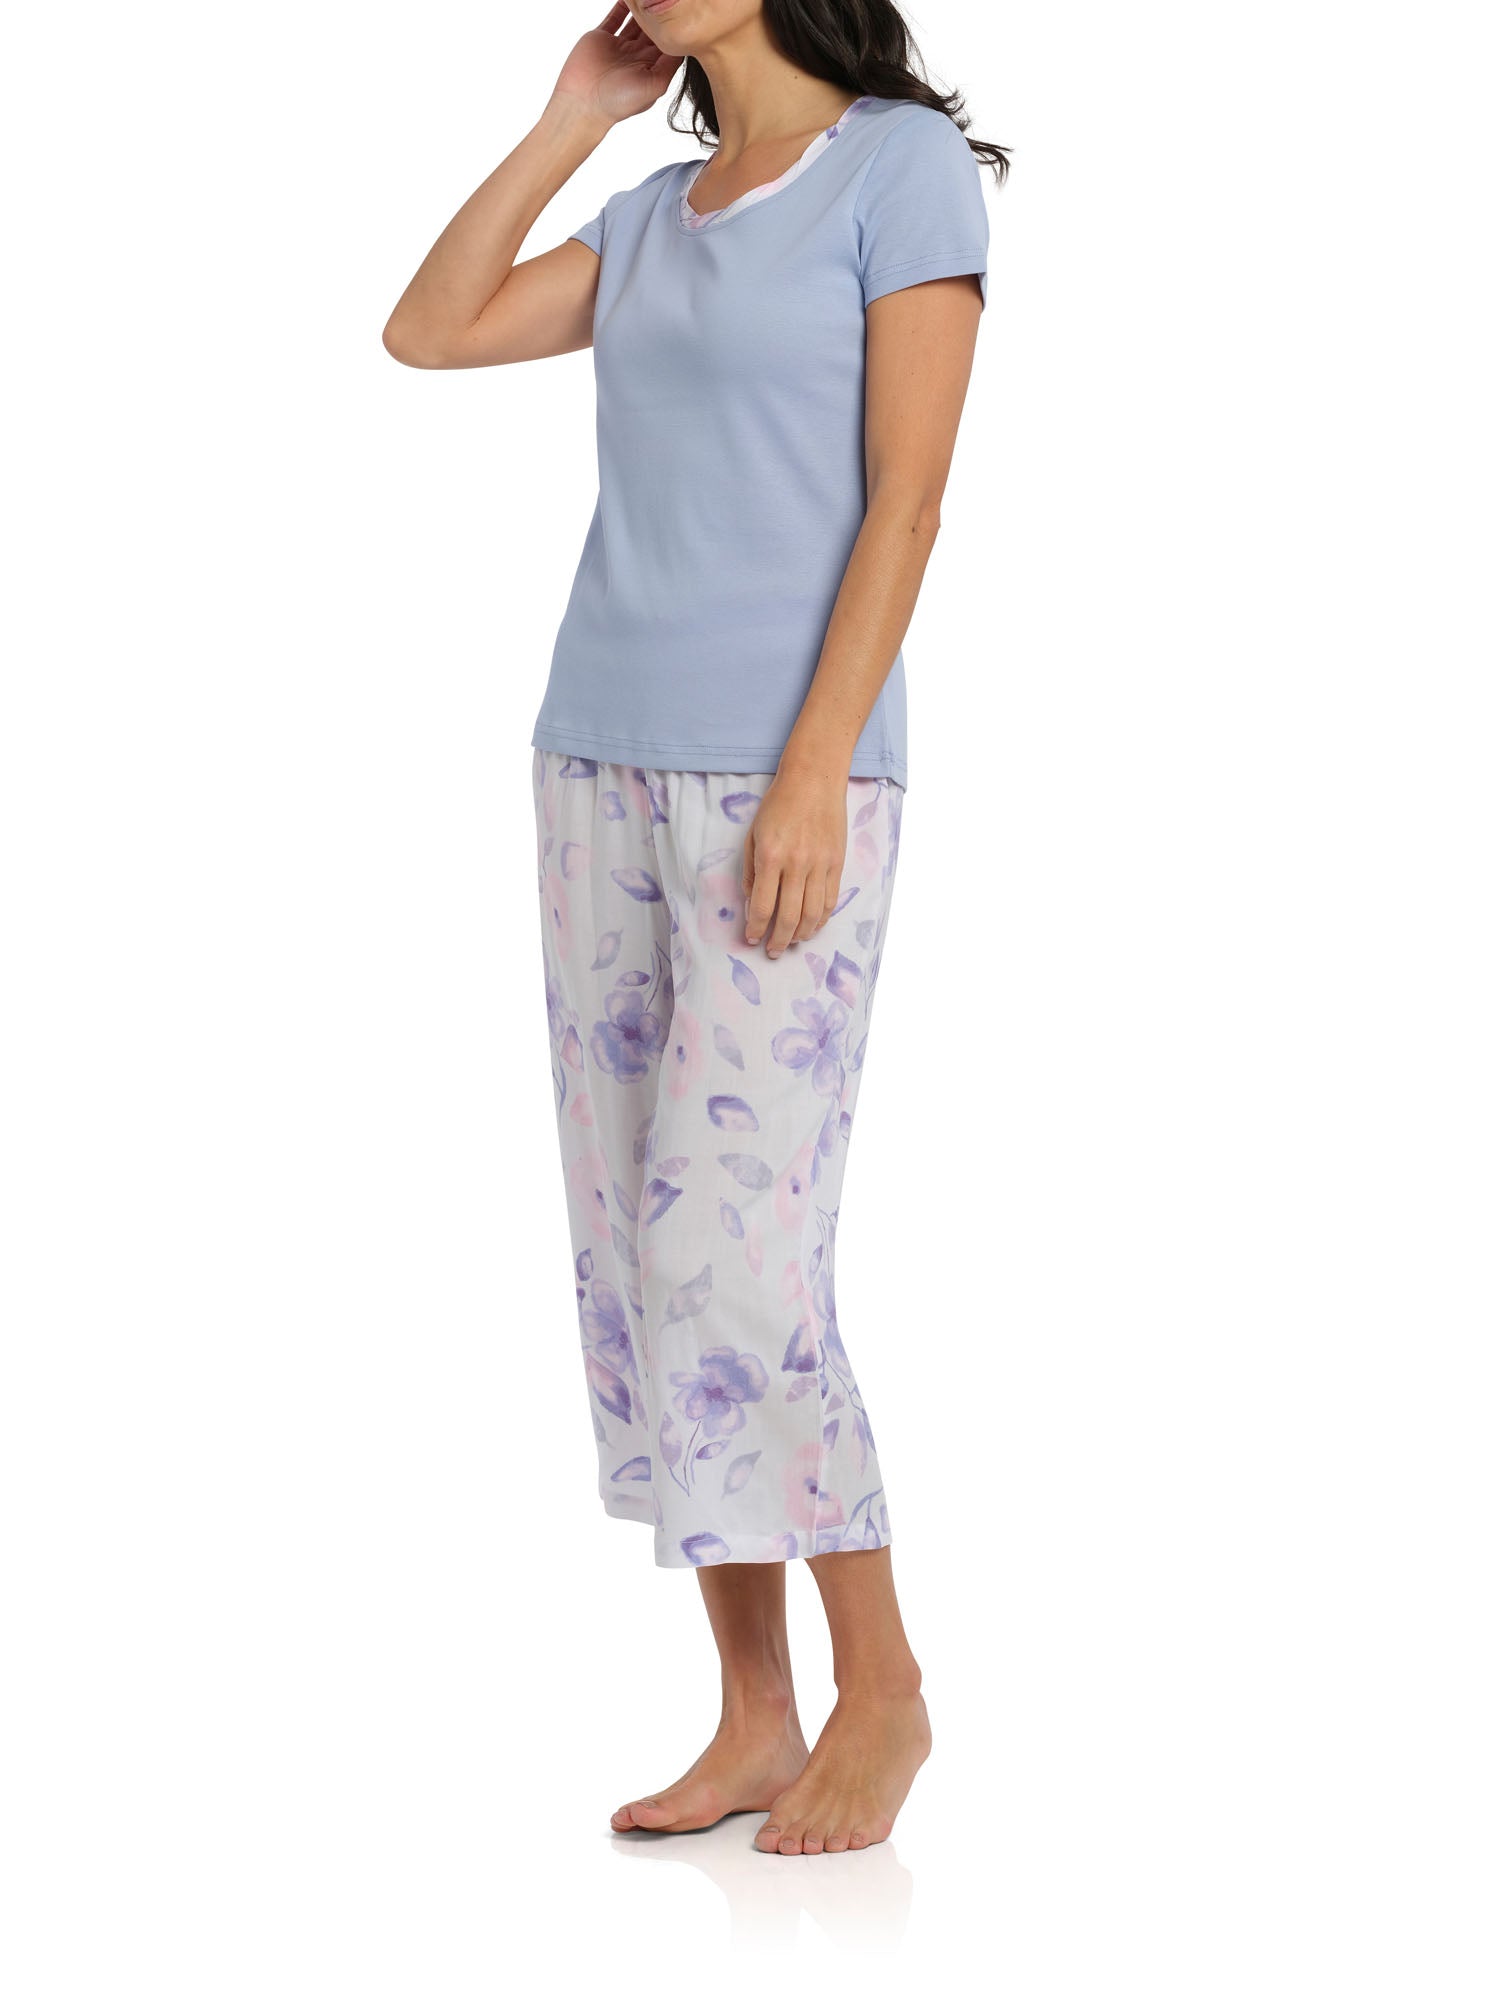 Women's Floral Rain Tee with 3/4 Pant Summer Pyjama Set | Magnolia Lounge Australia